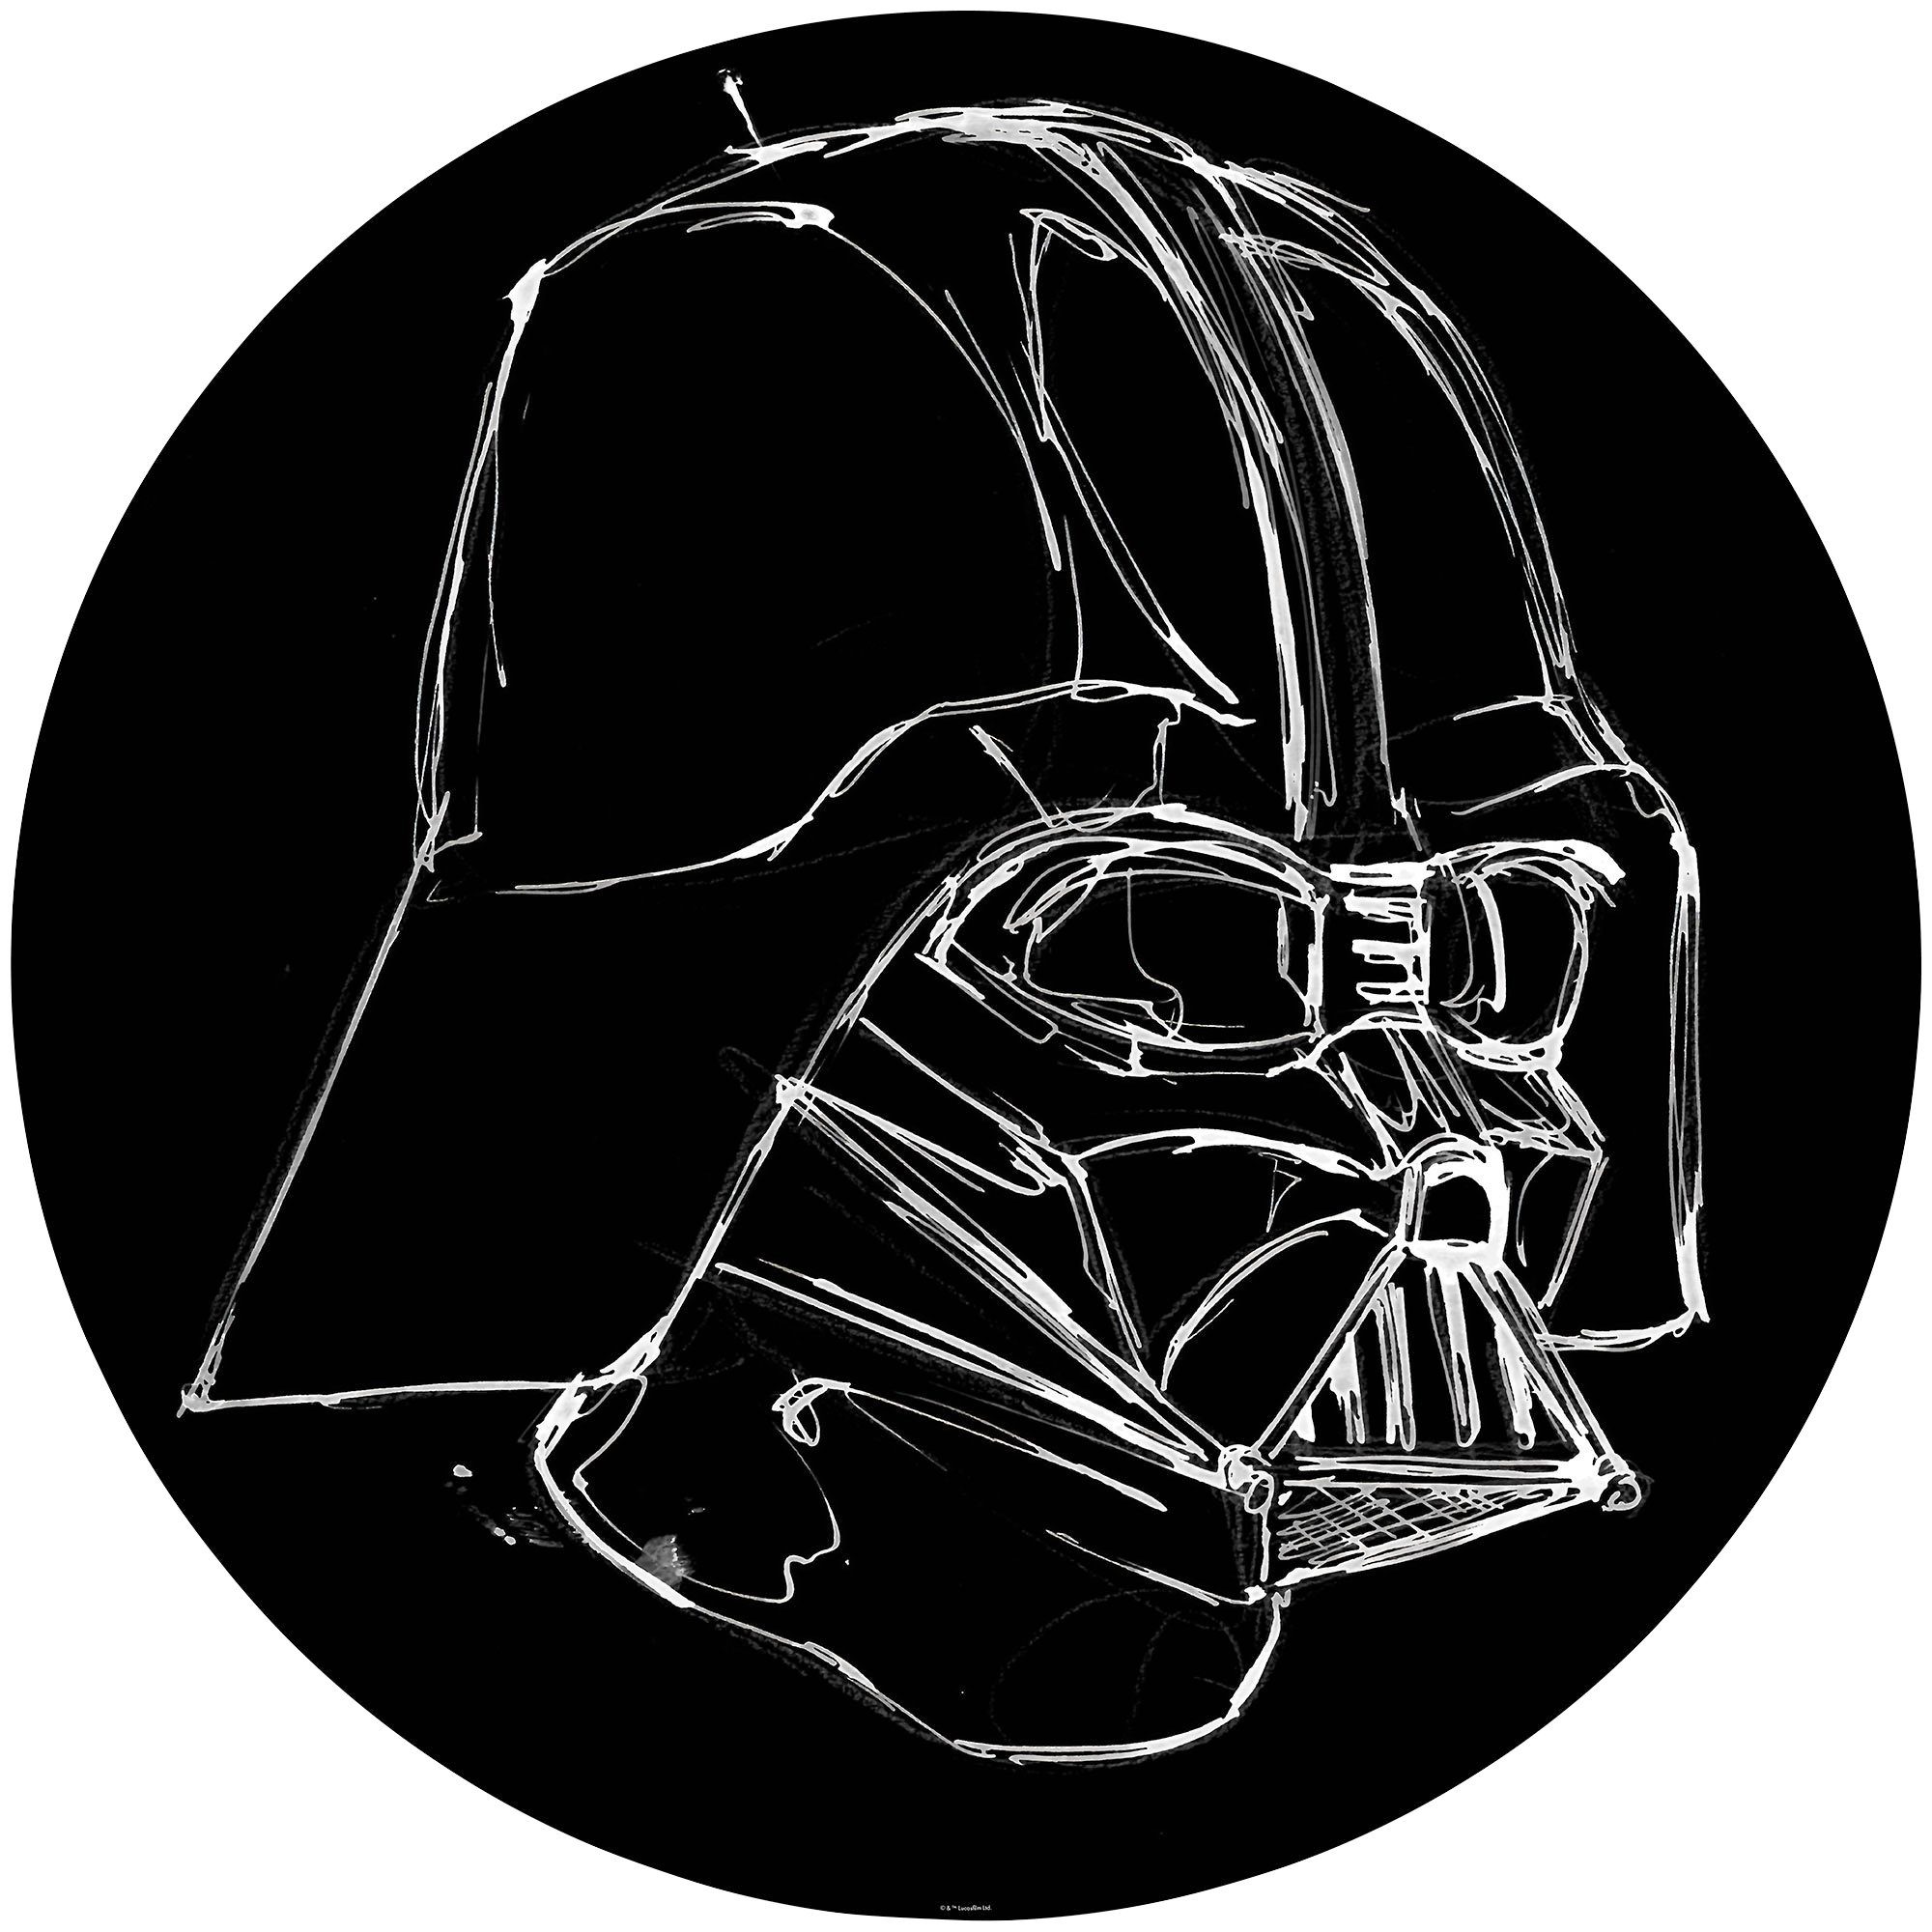 Komar Fototapete »Star Wars Ink Vader«, glatt, bedruckt, Comic, Retro, mehrfarbig, BxH: 128x128 cm, selbstklebend-Otto